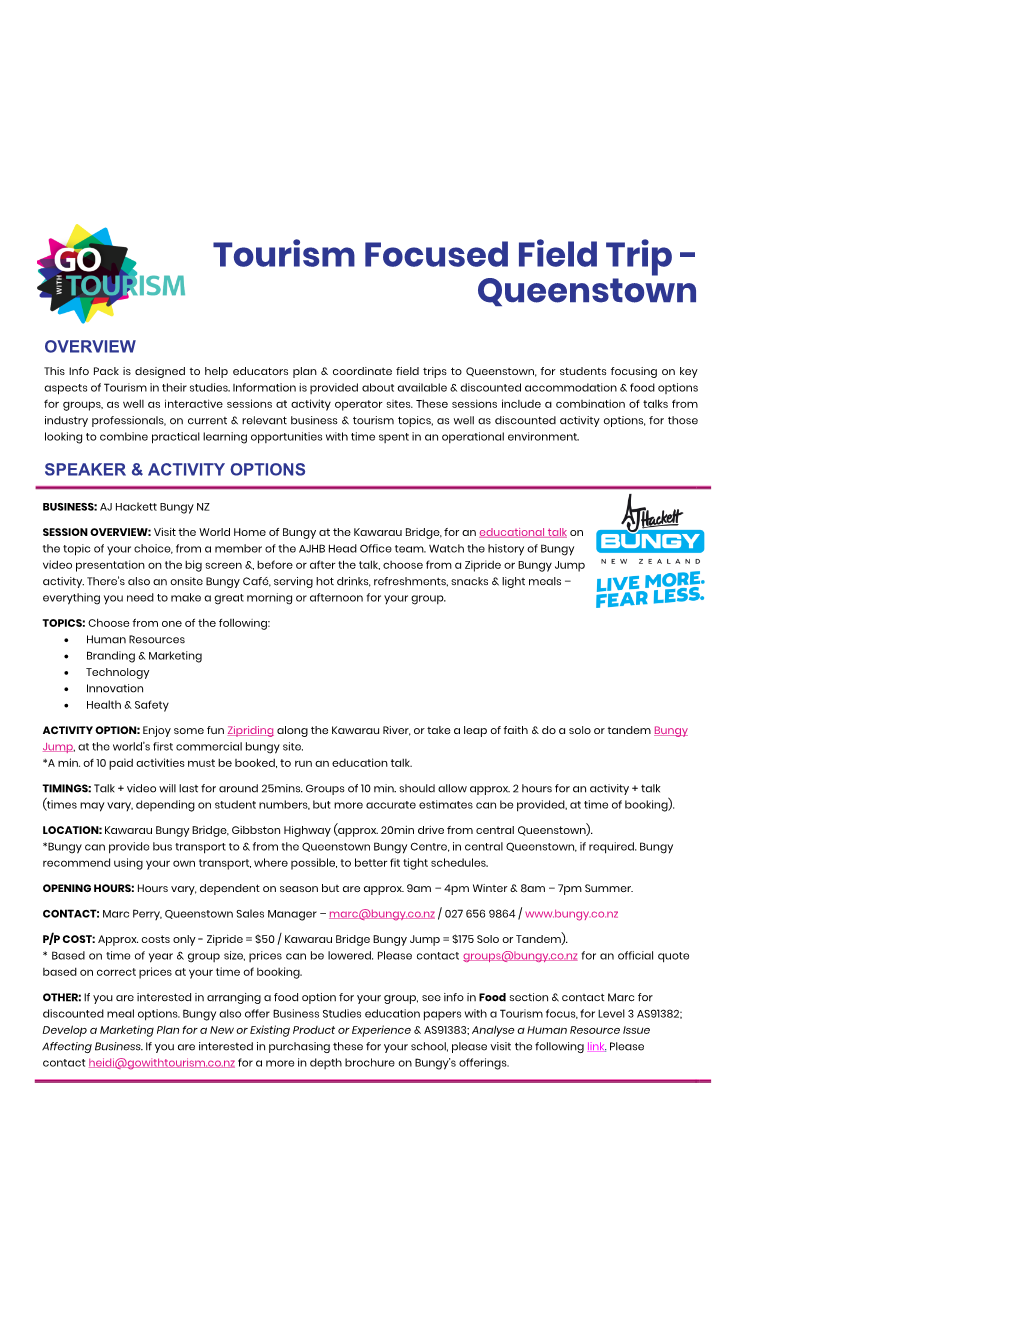 Tourism Focused Field Trip - Queenstown